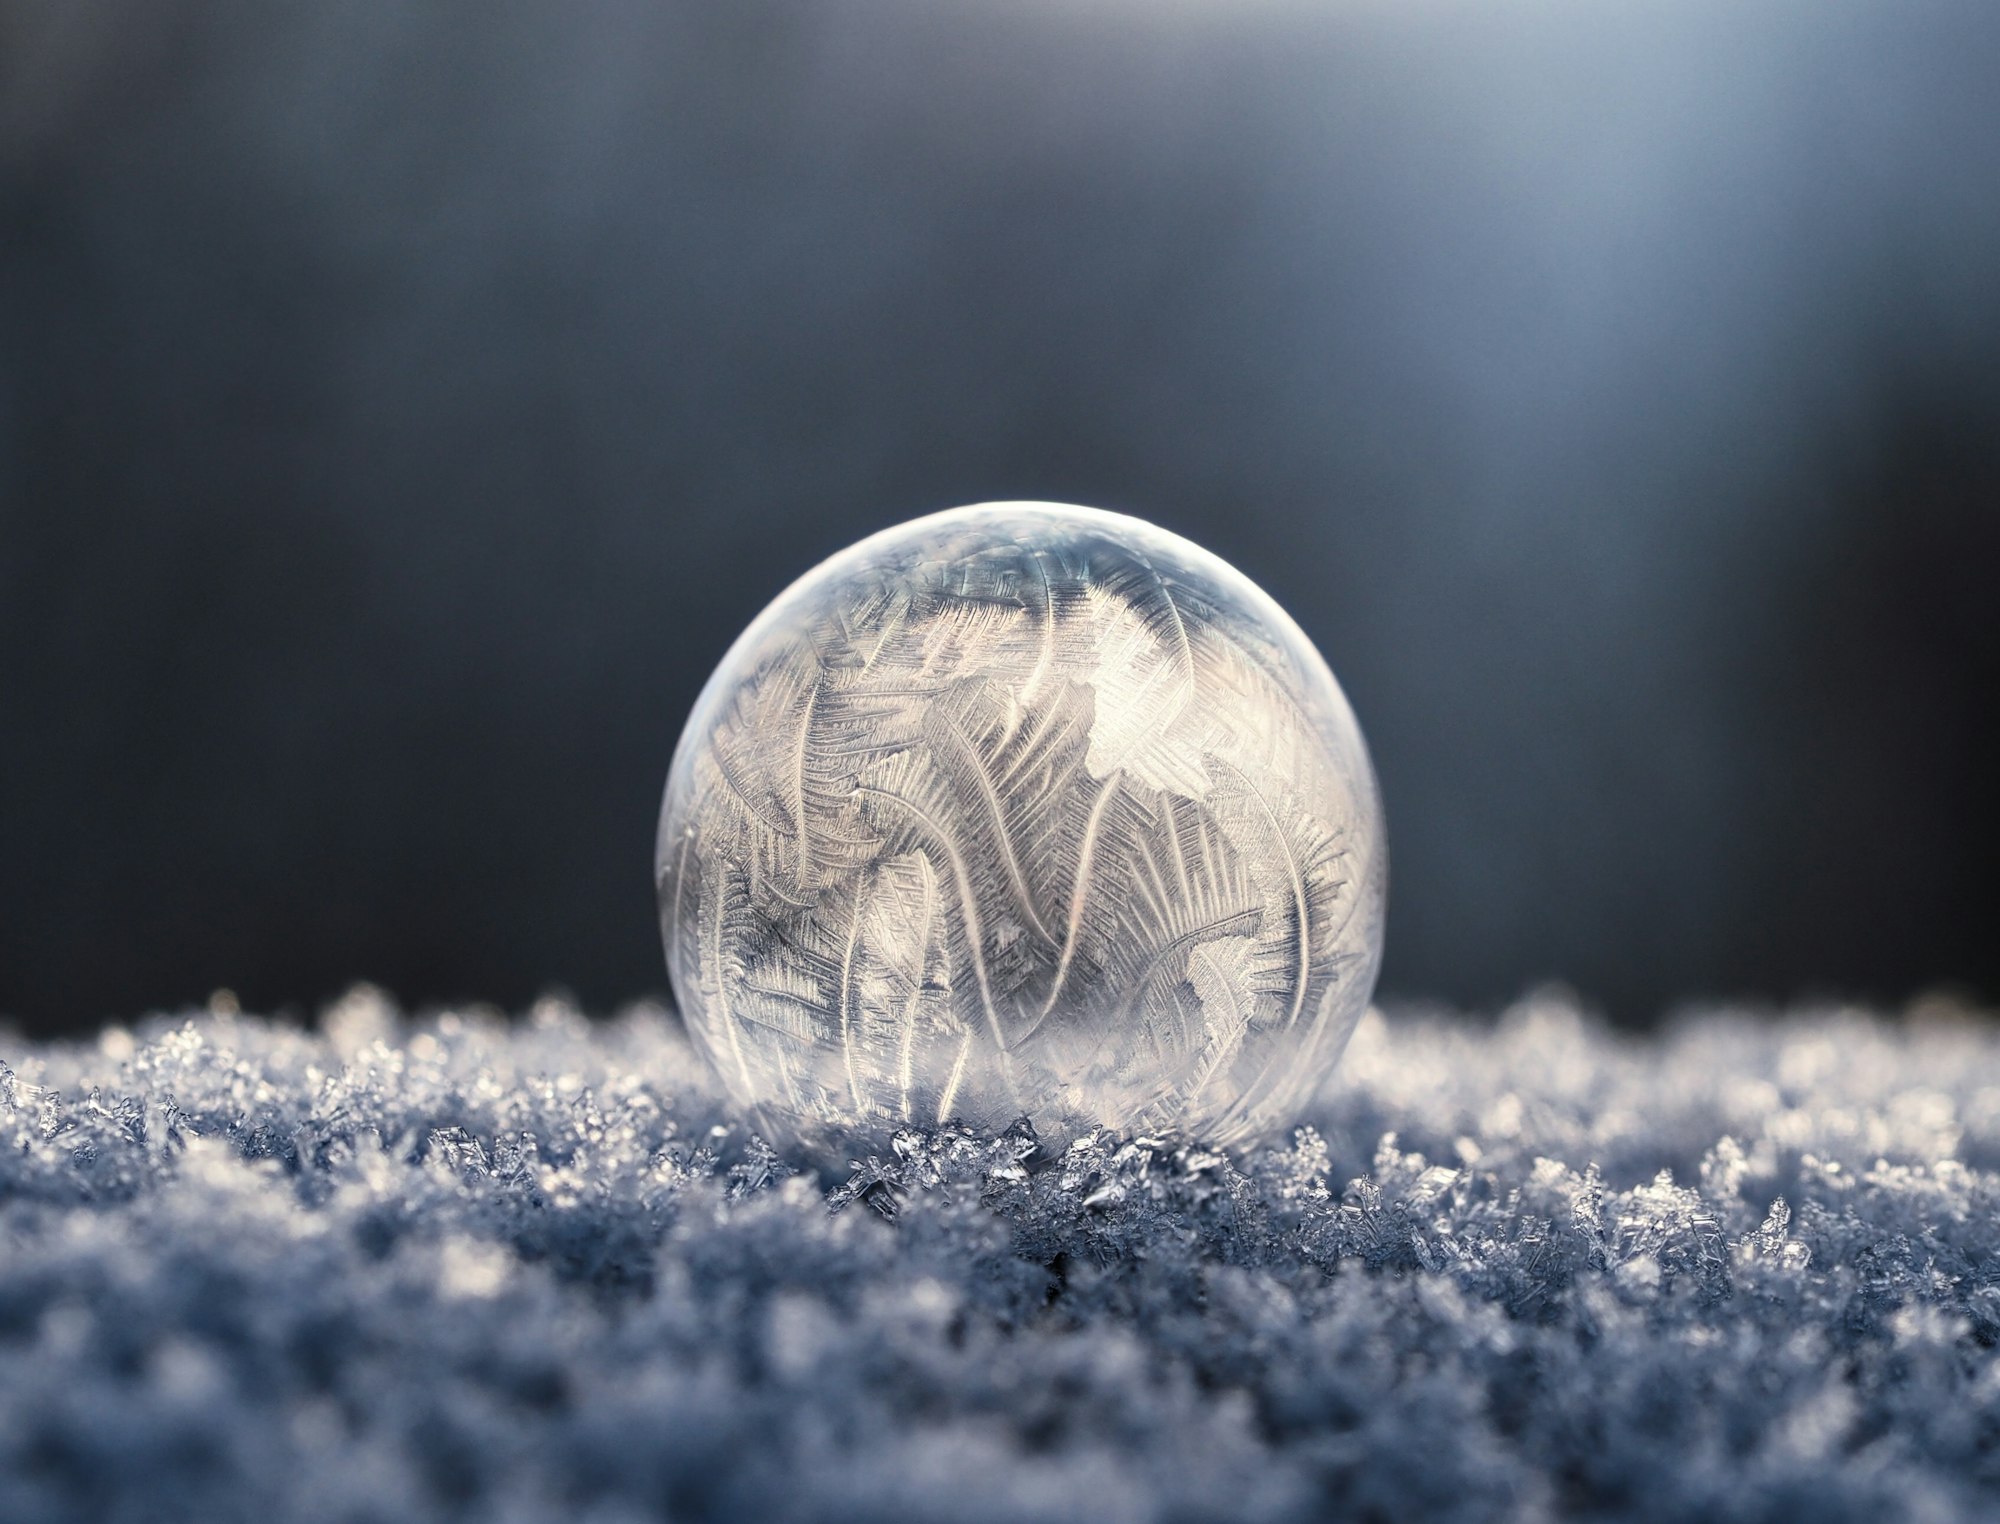 Macro view of frozen winter ball